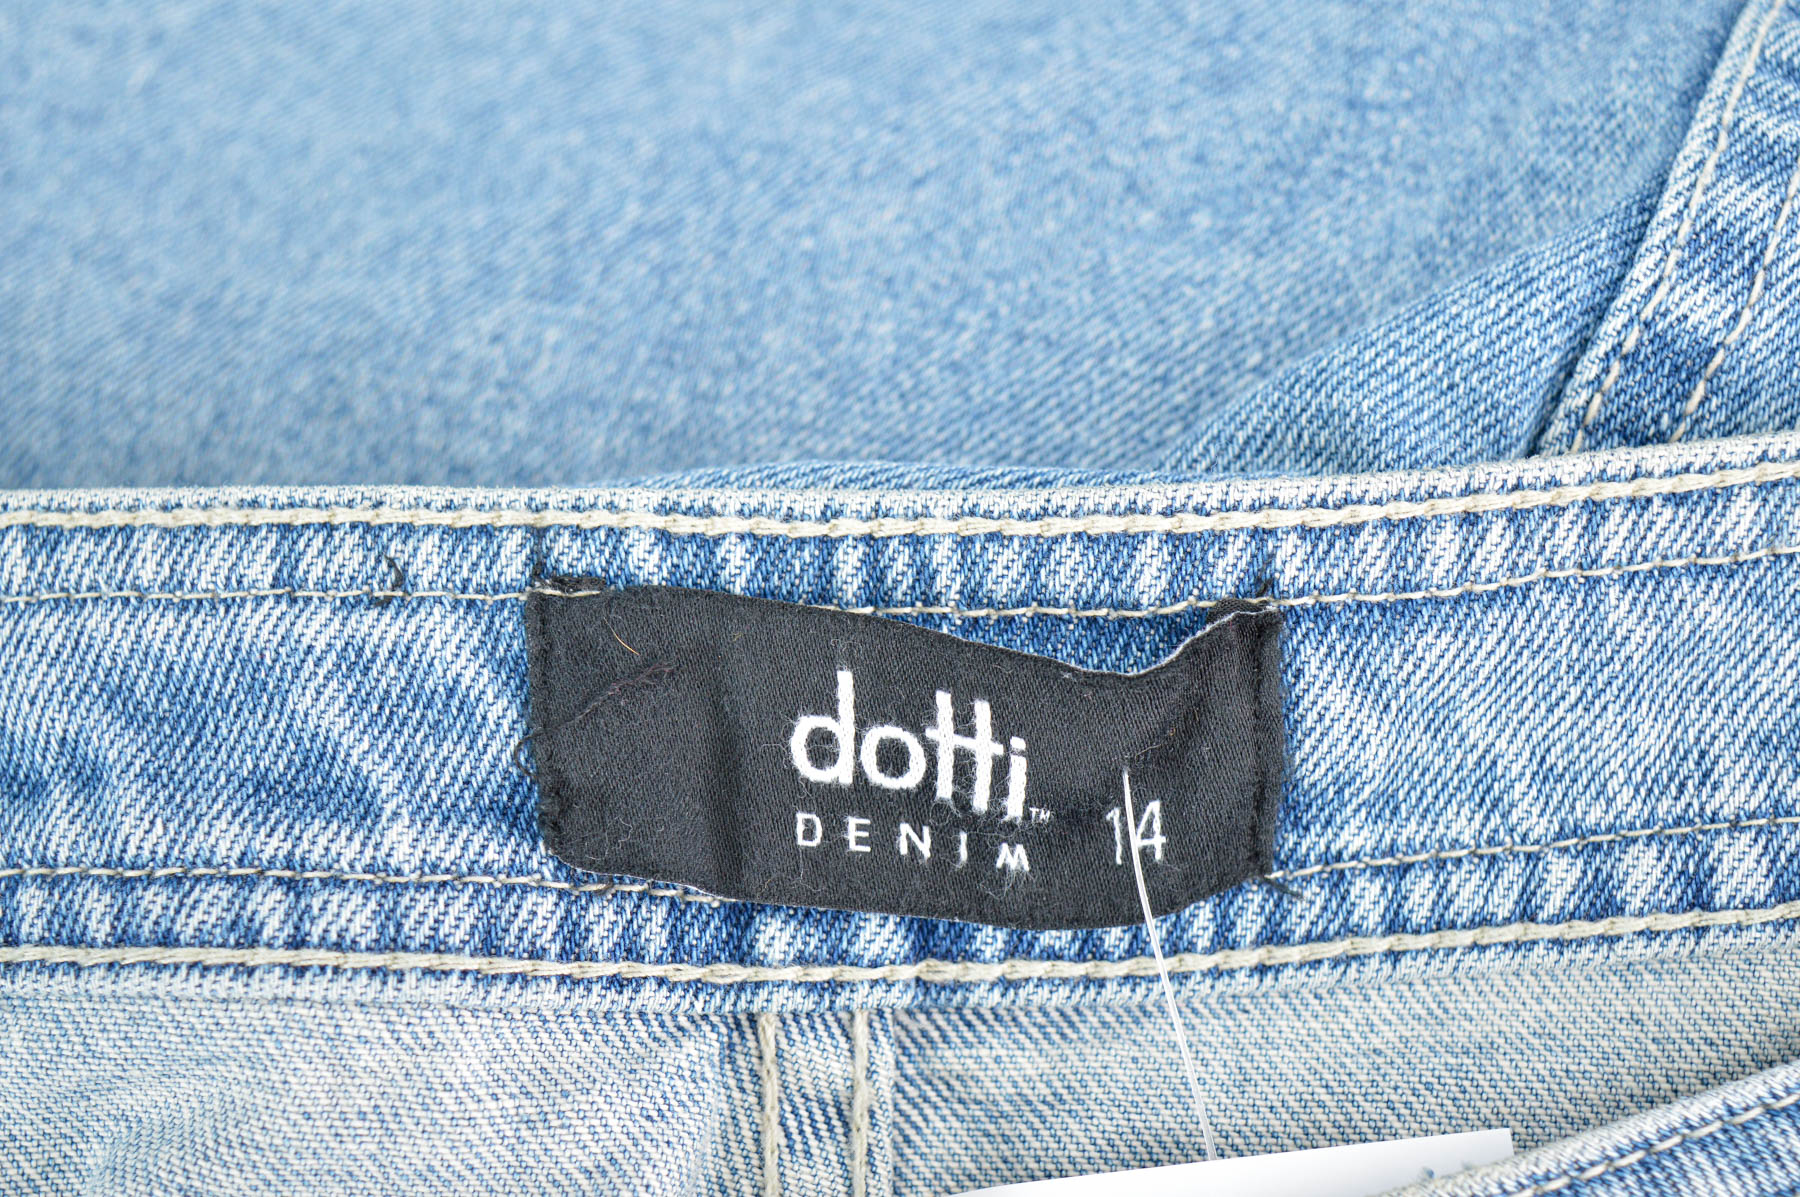 Denim skirt - Dotti - 2